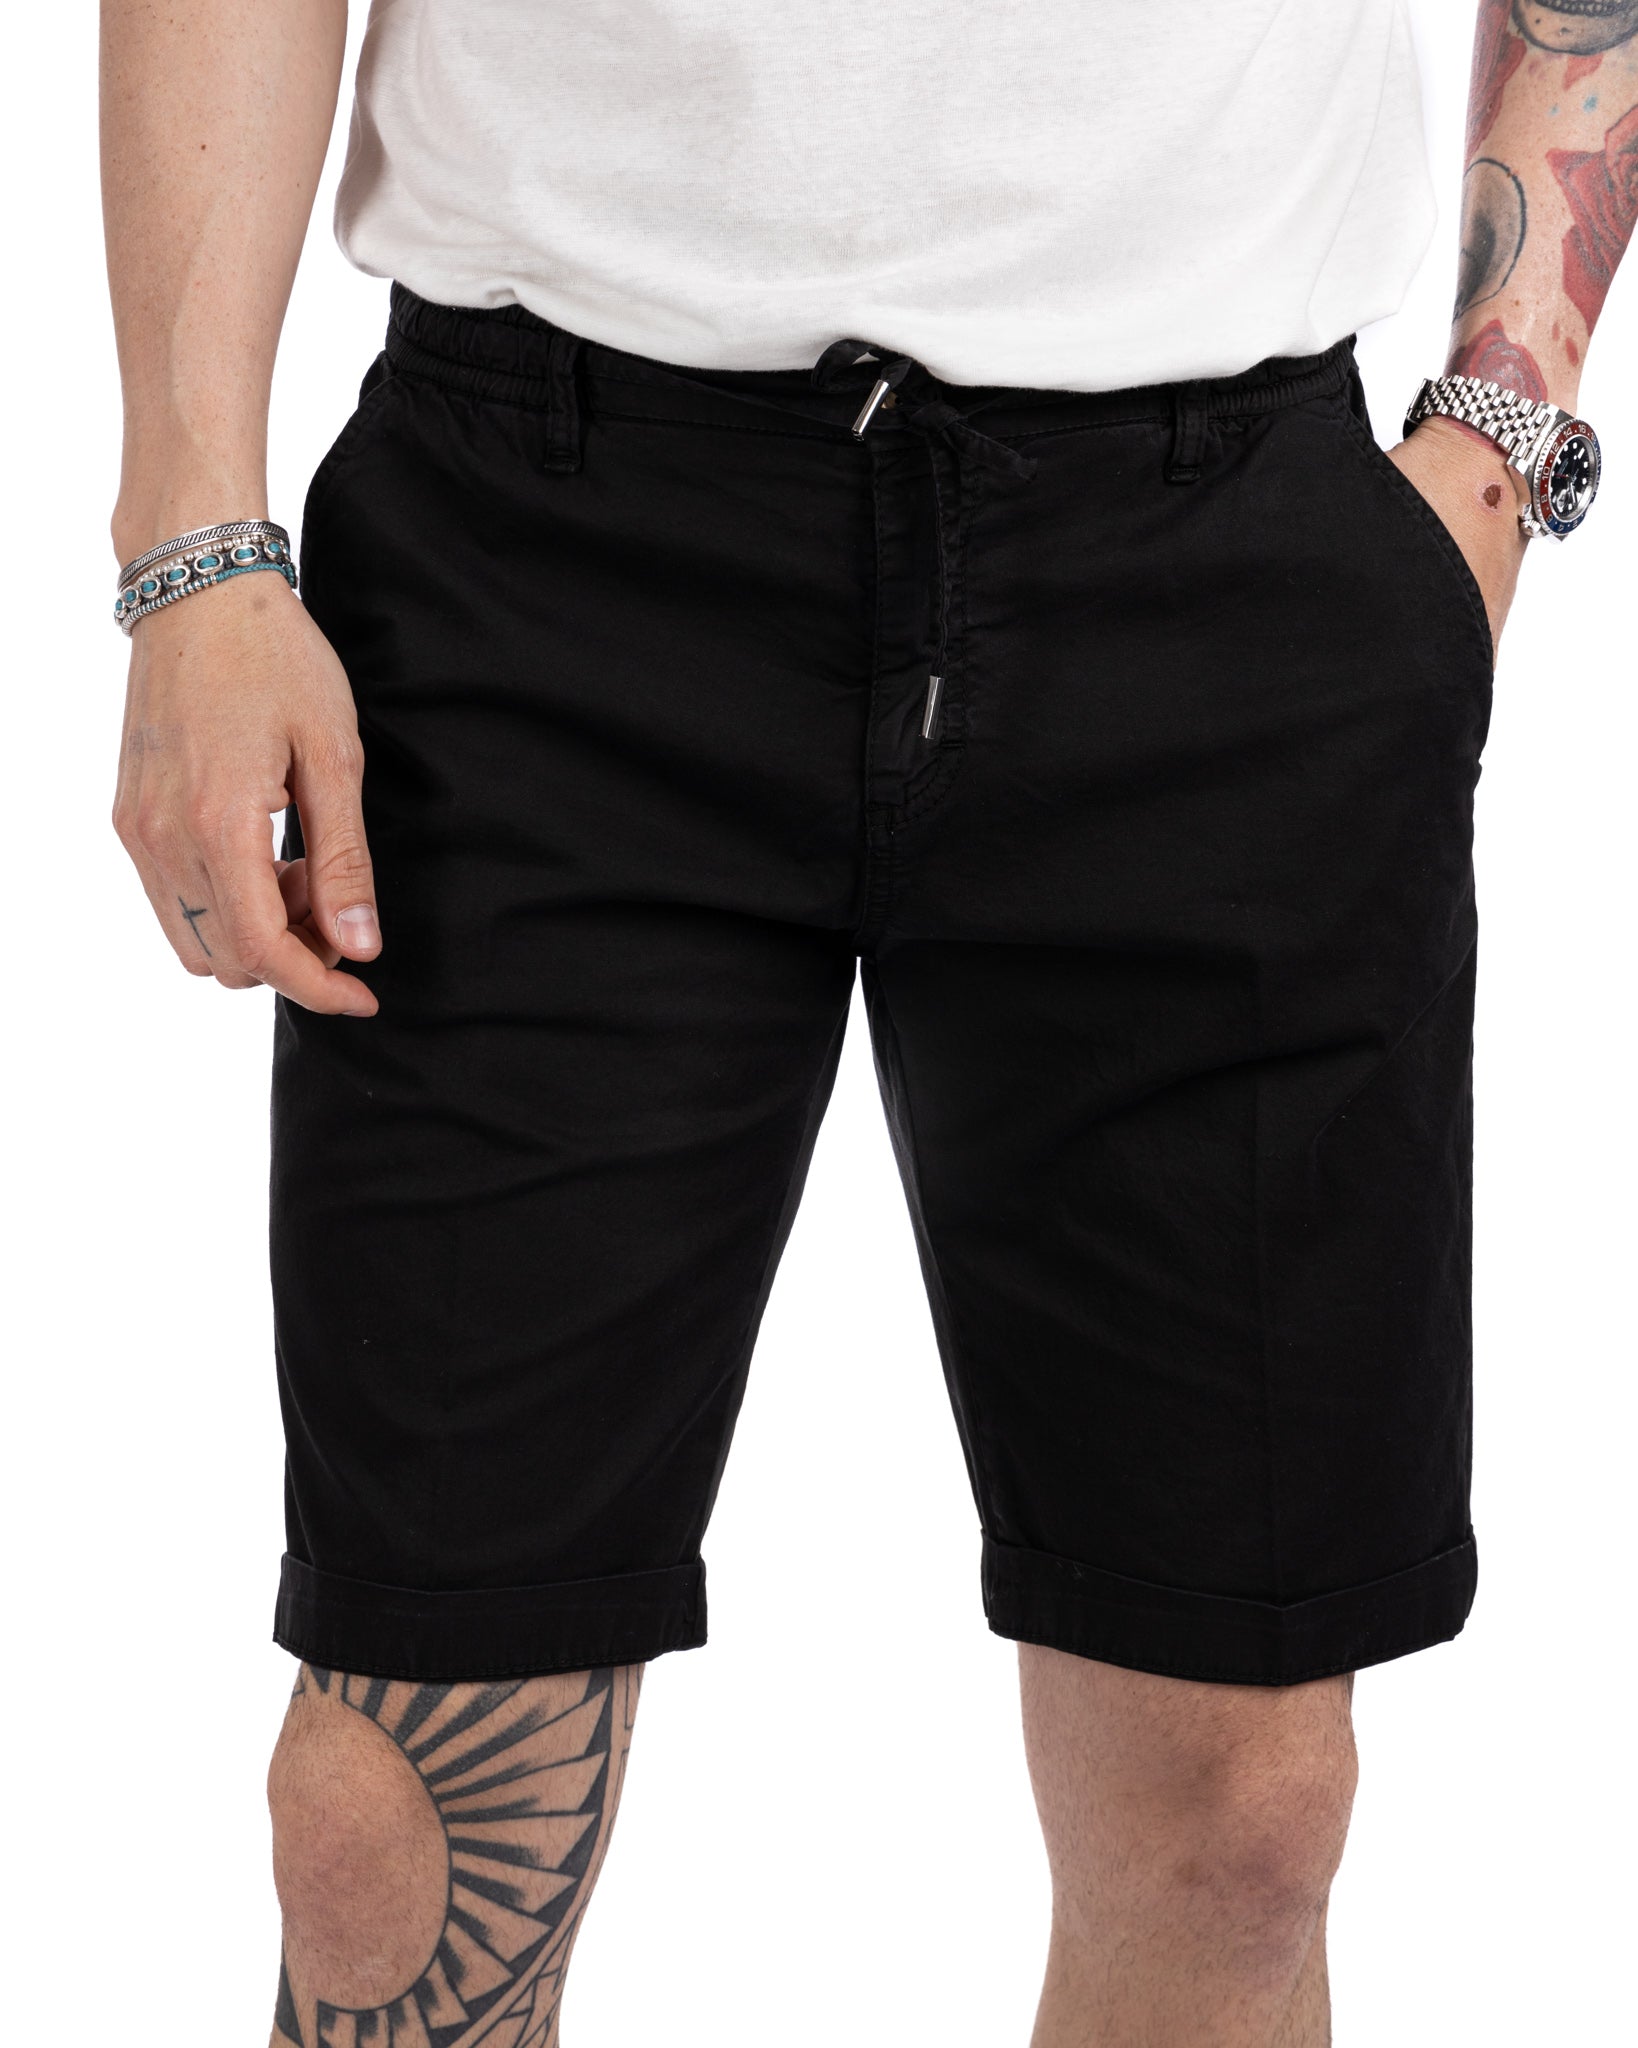 Barbuda - black cotton Bermuda shorts